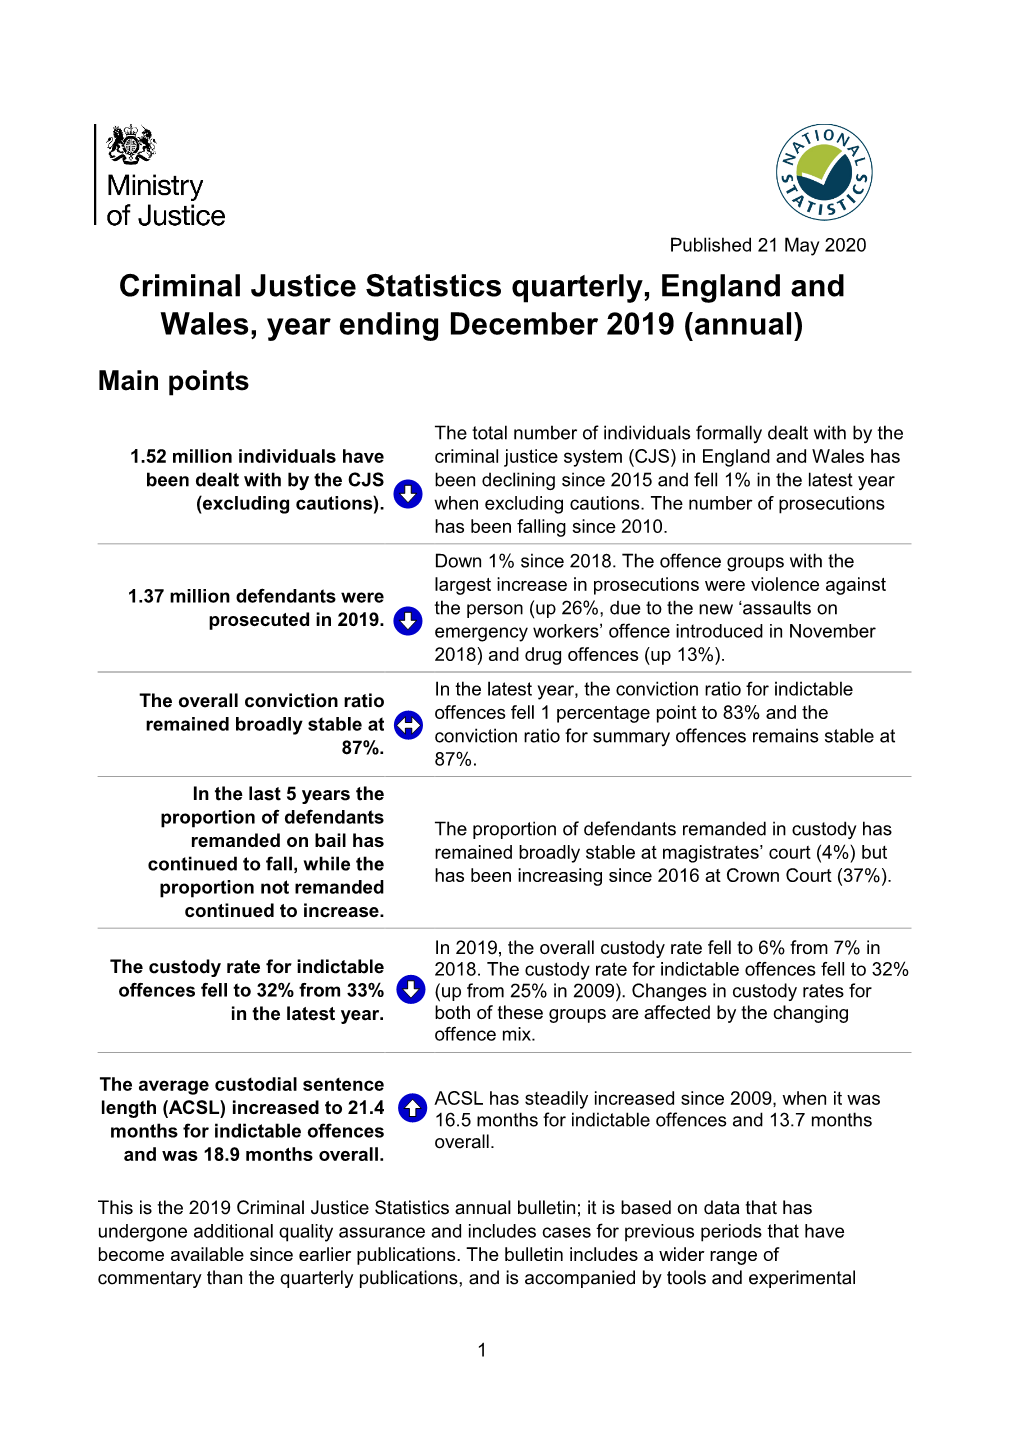 Criminal Justice Statistics Quarterly, December 2019